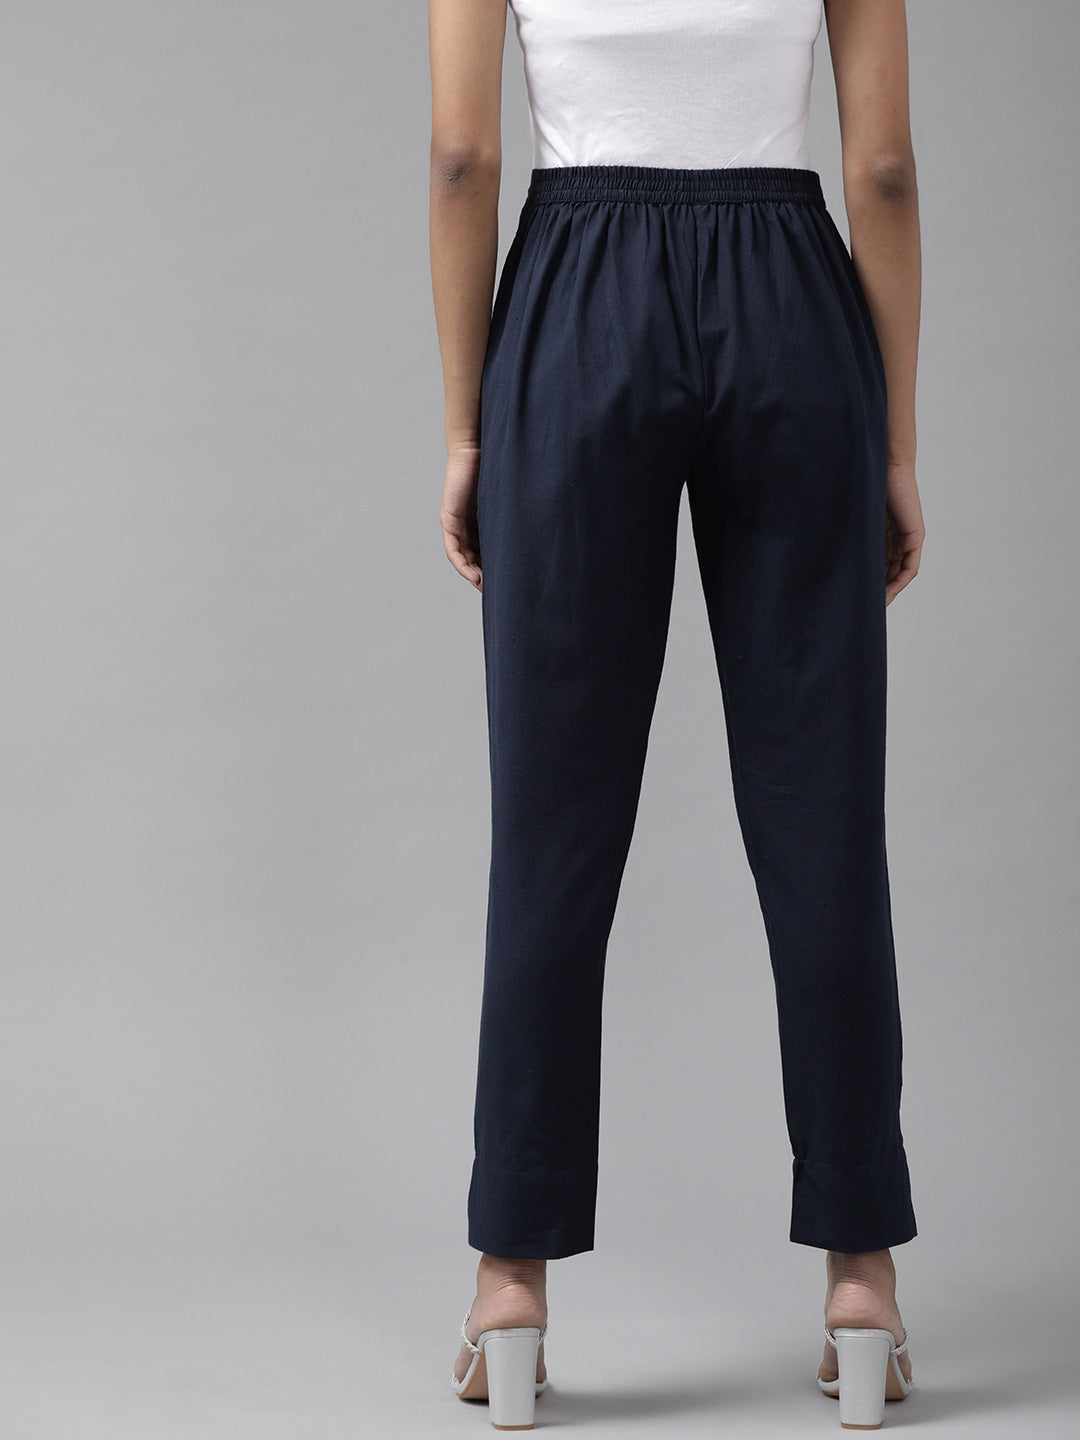 Navy Blue Cotton Fit Trousers-Yufta Store-4206PNTNBS